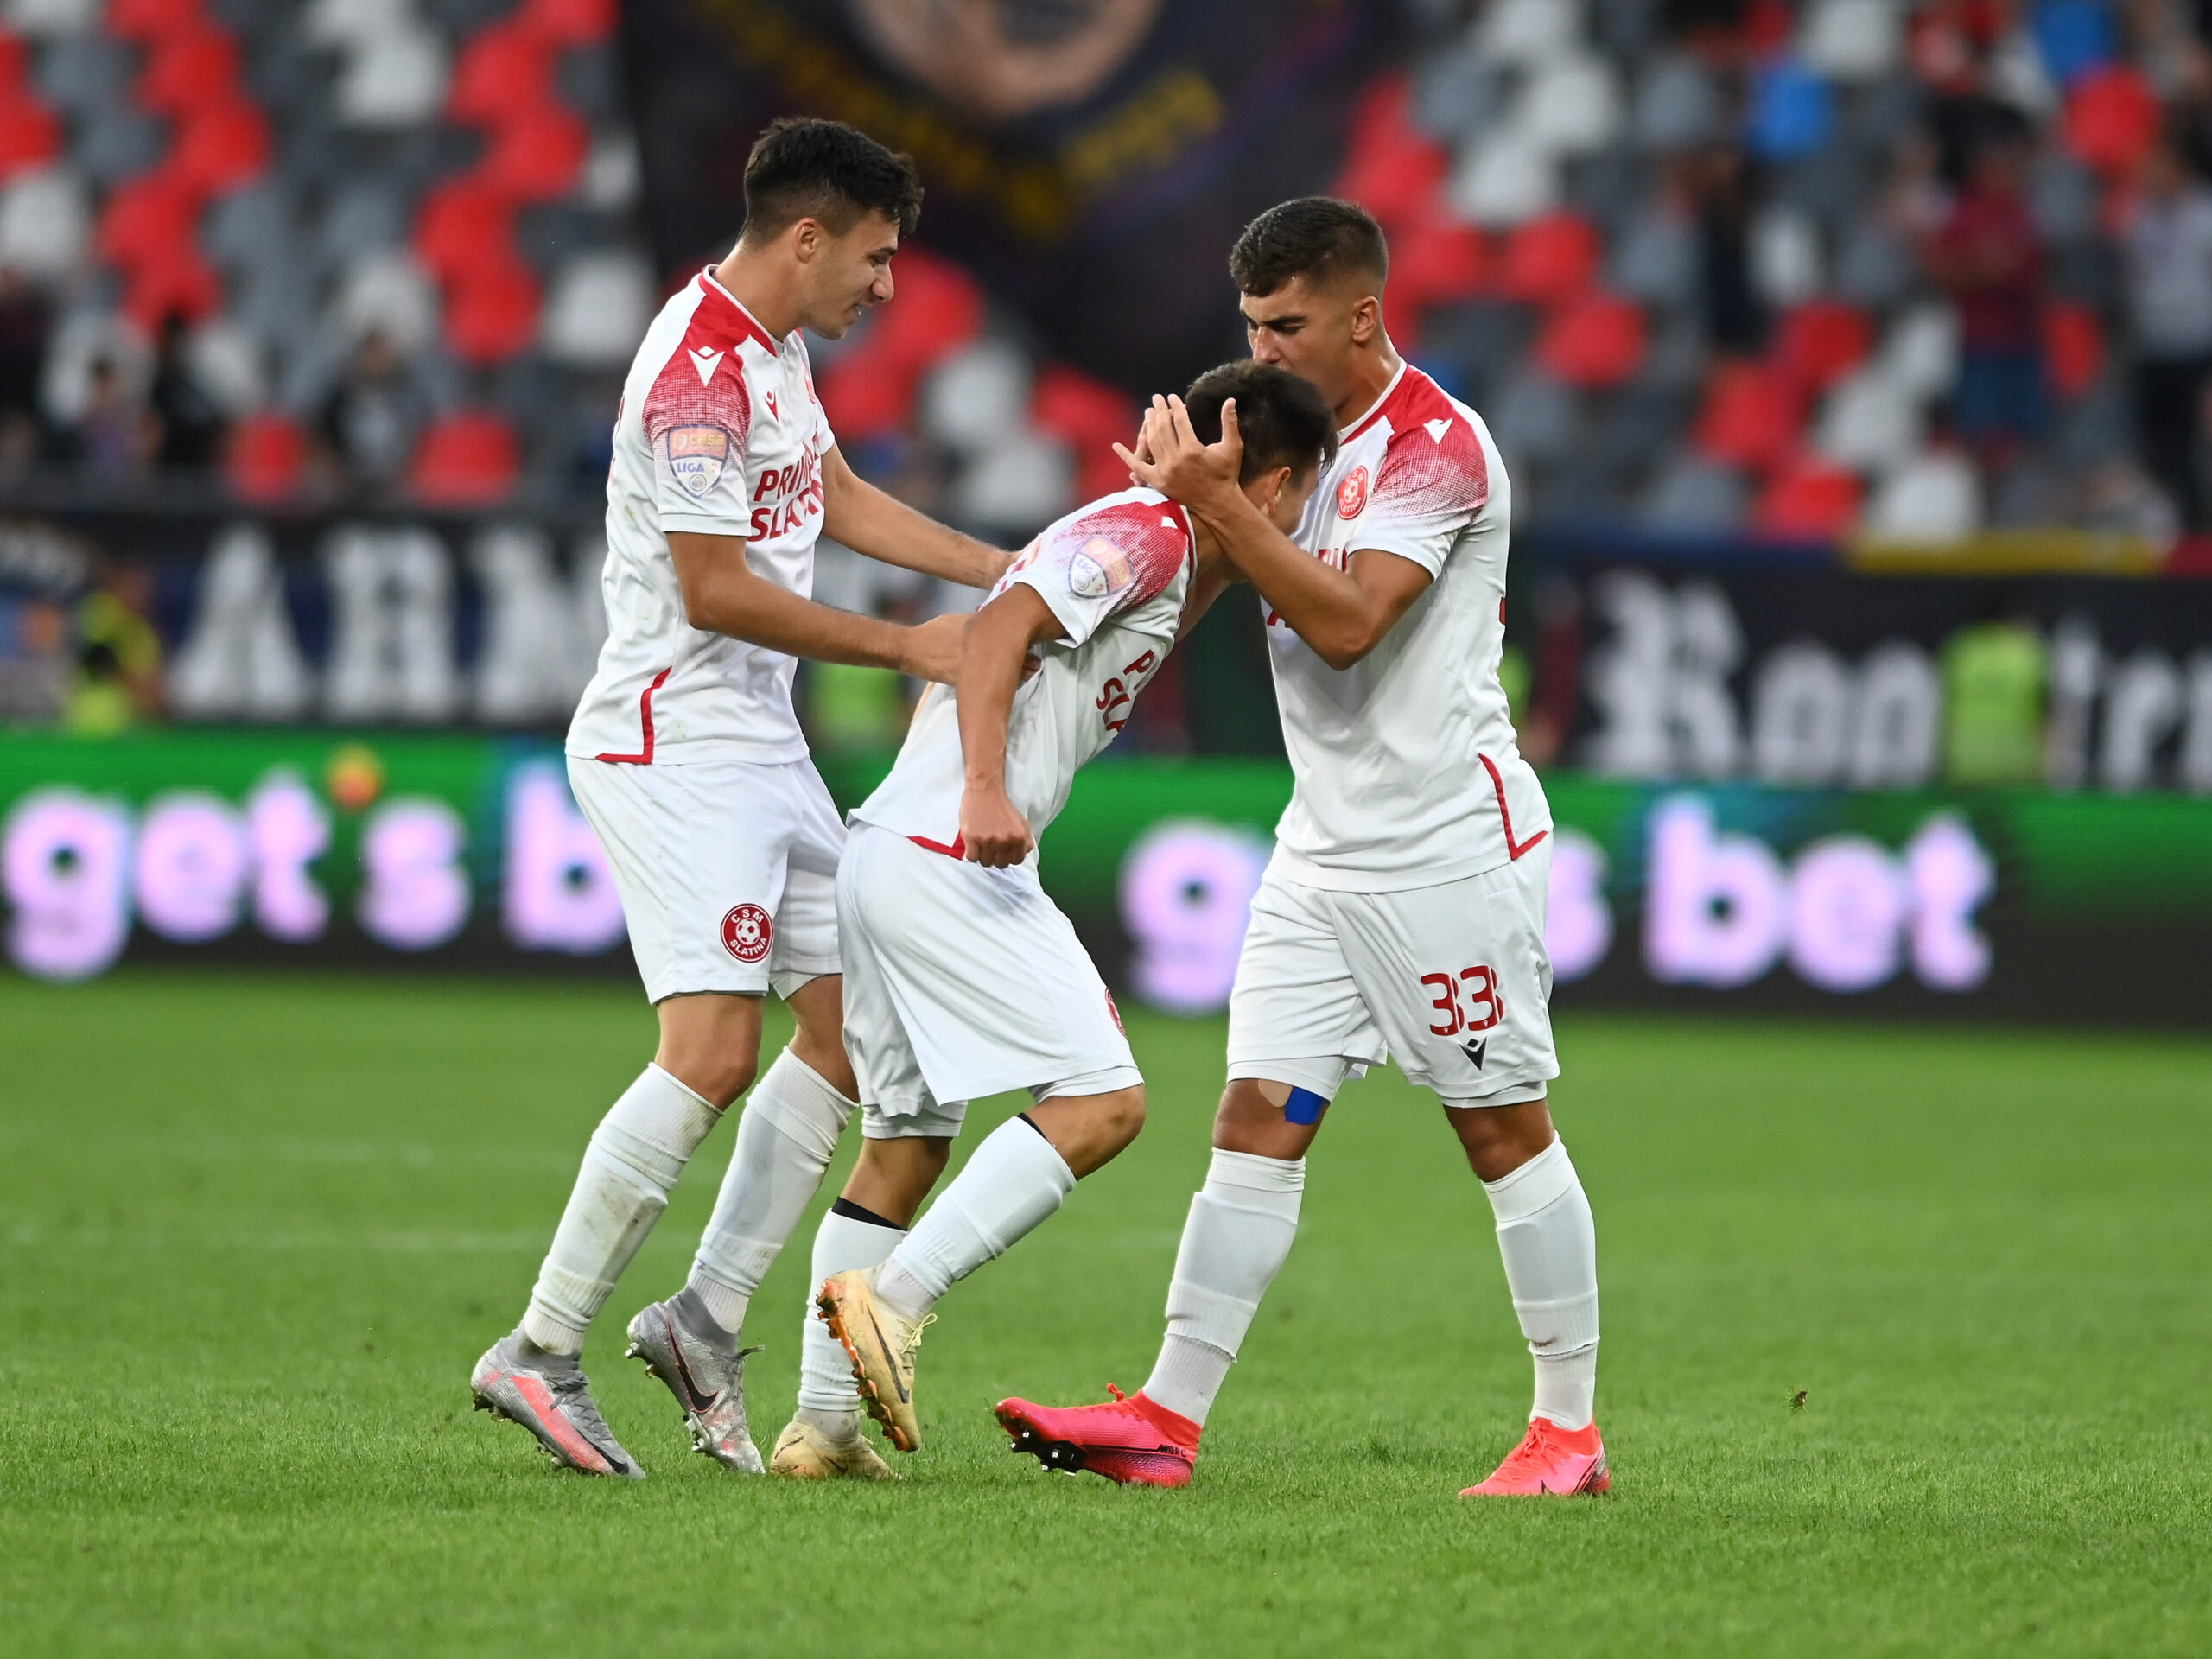 Liga 2: Steaua vs CSM Slatina Miza pe echipa Armatei - superbet